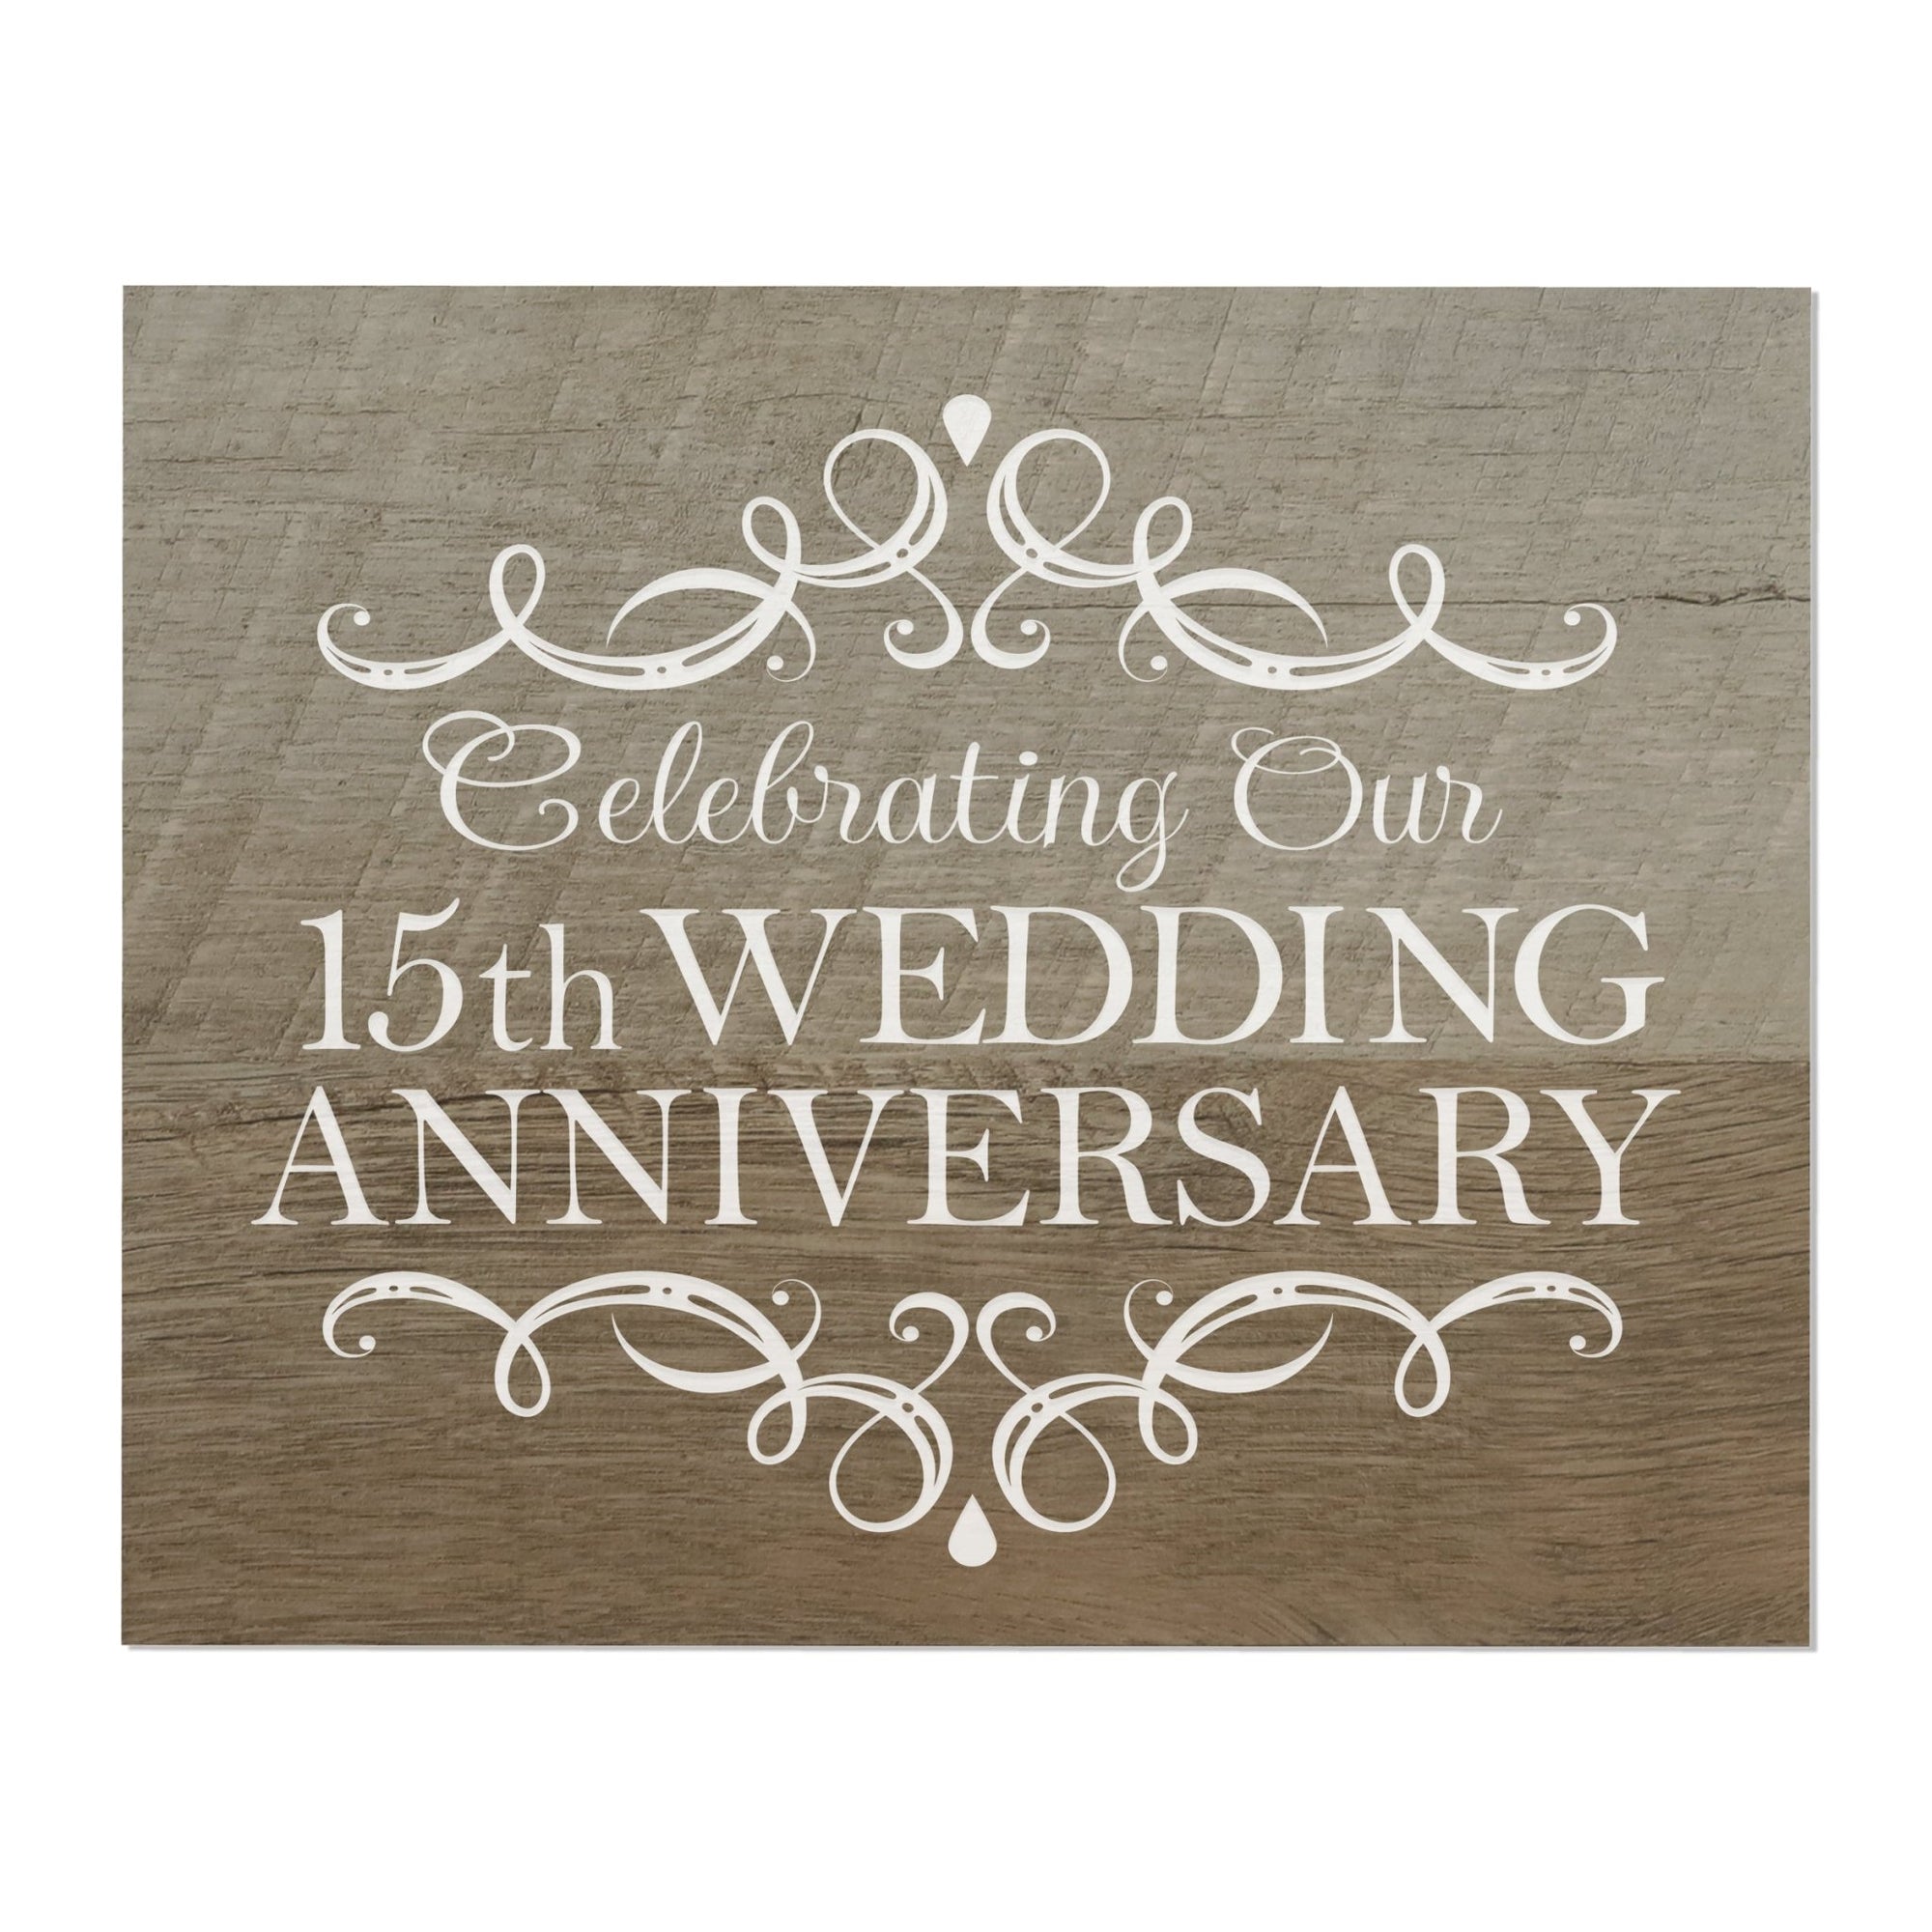 15th Wedding Anniversary Wall Plaque - Celebrating - LifeSong Milestones